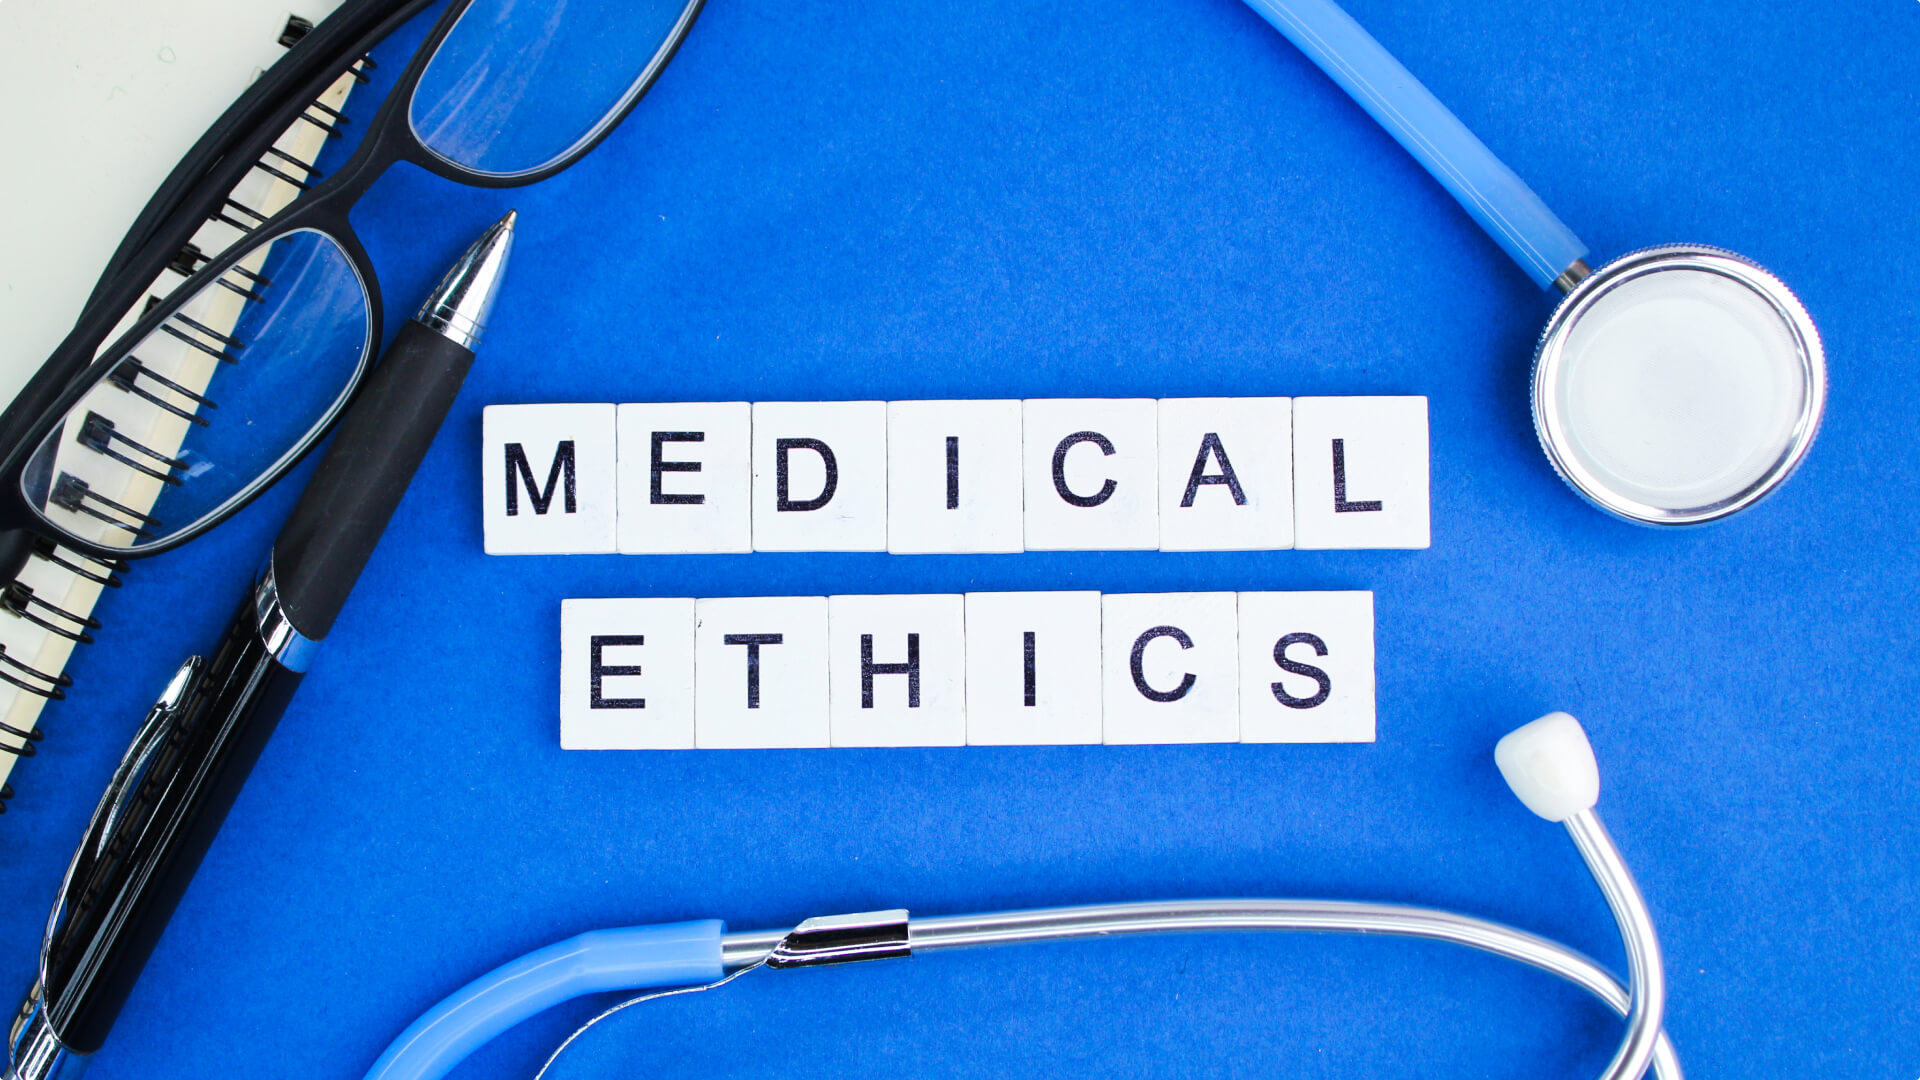 medical ethics on blue background with stethoscope, glasses and stethoscope